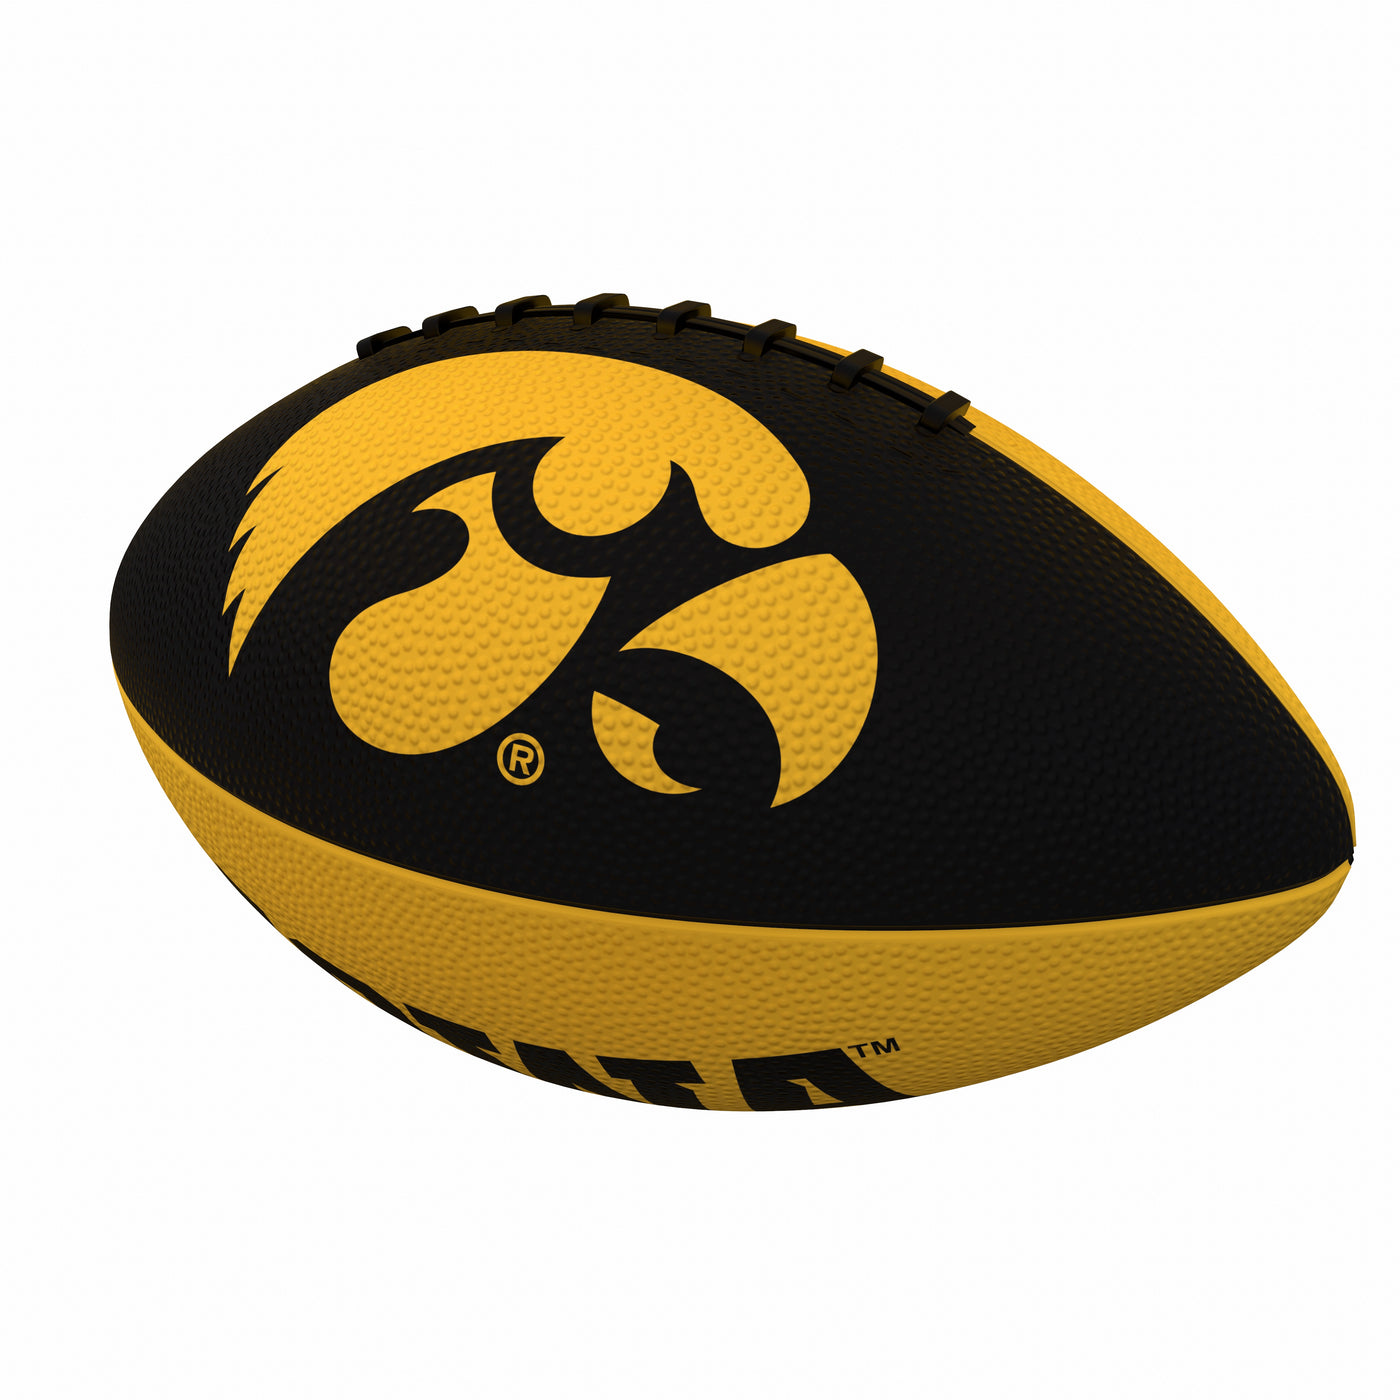 Iowa Pinwheel Logo Junior Size Rubber Football